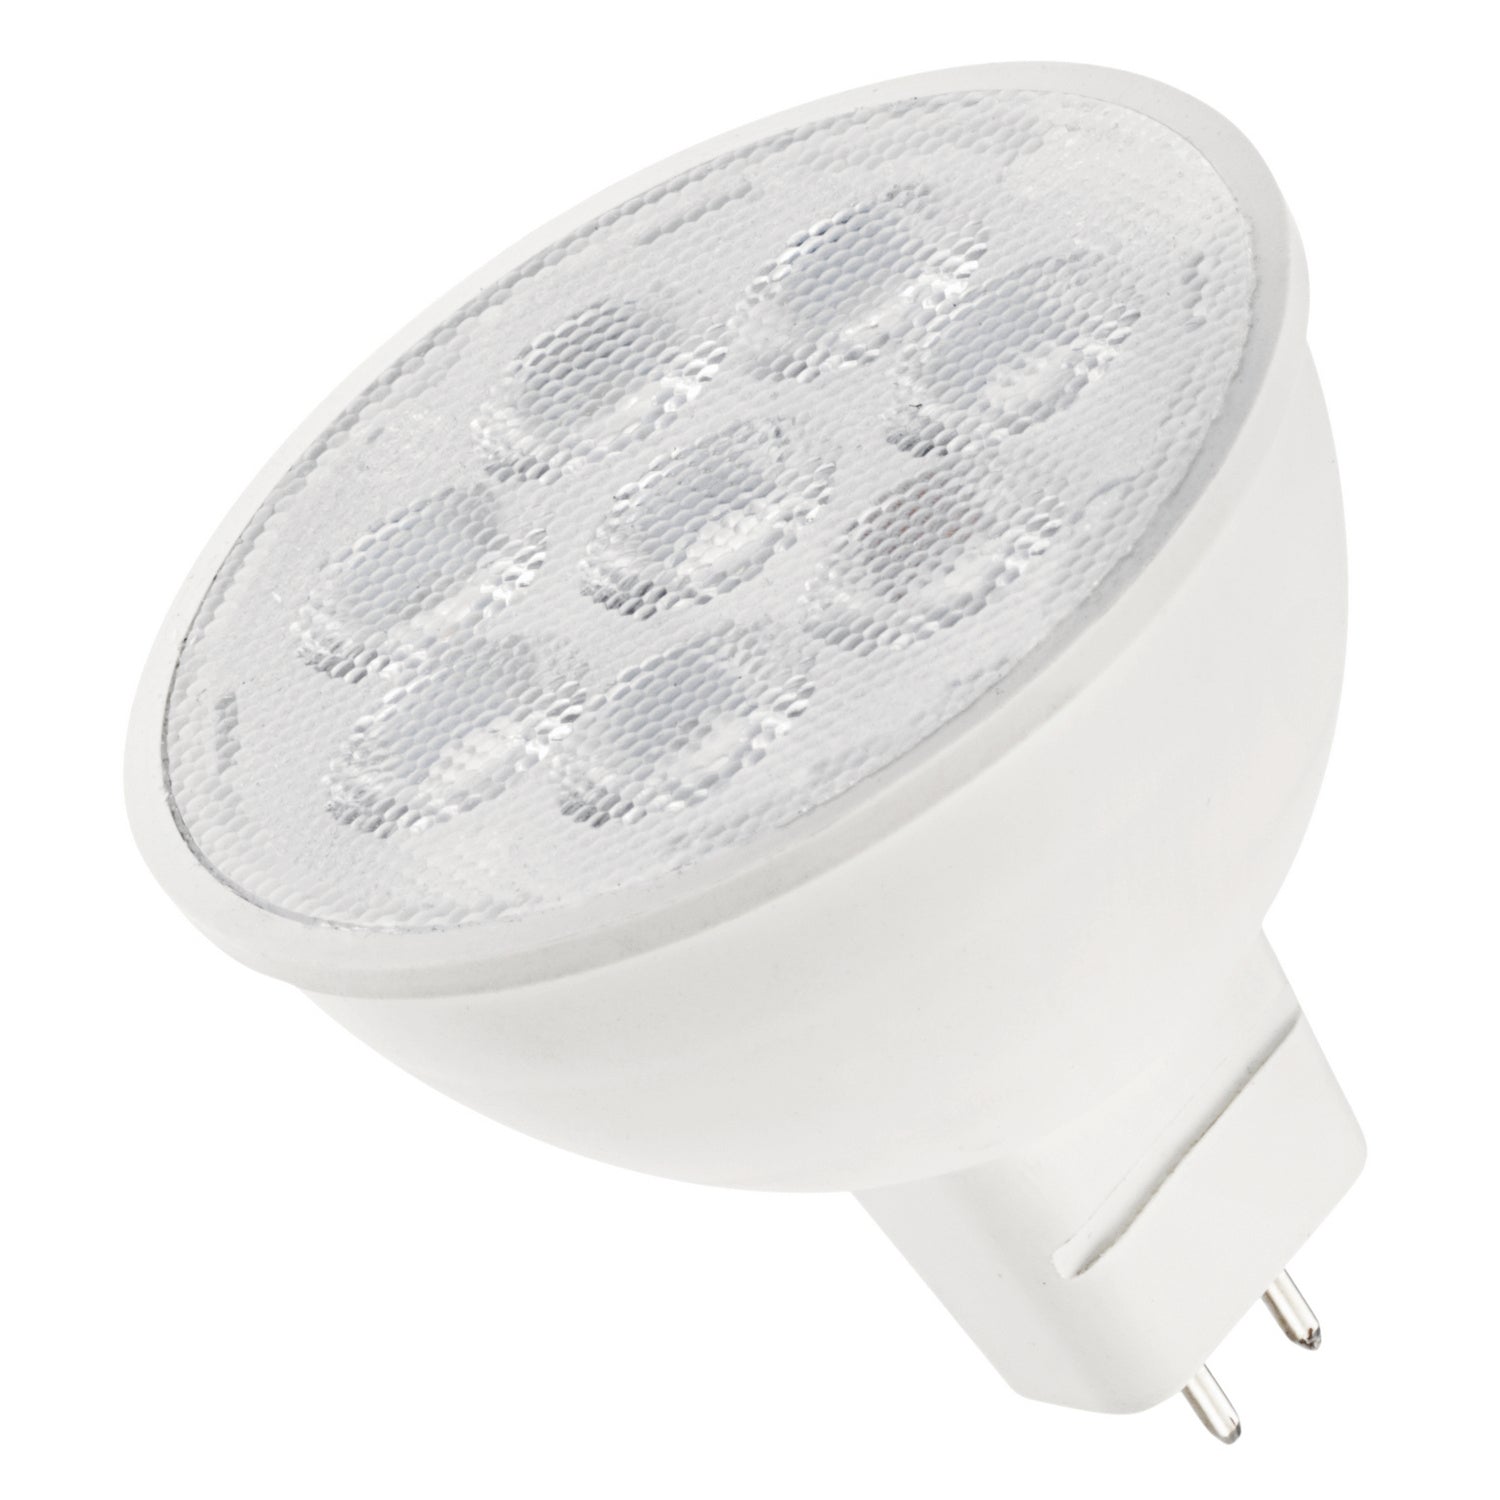 Kichler Canada - LED Lamp - CS LED Lamps - White Material (Not Painted)- Union Lighting Luminaires Decor